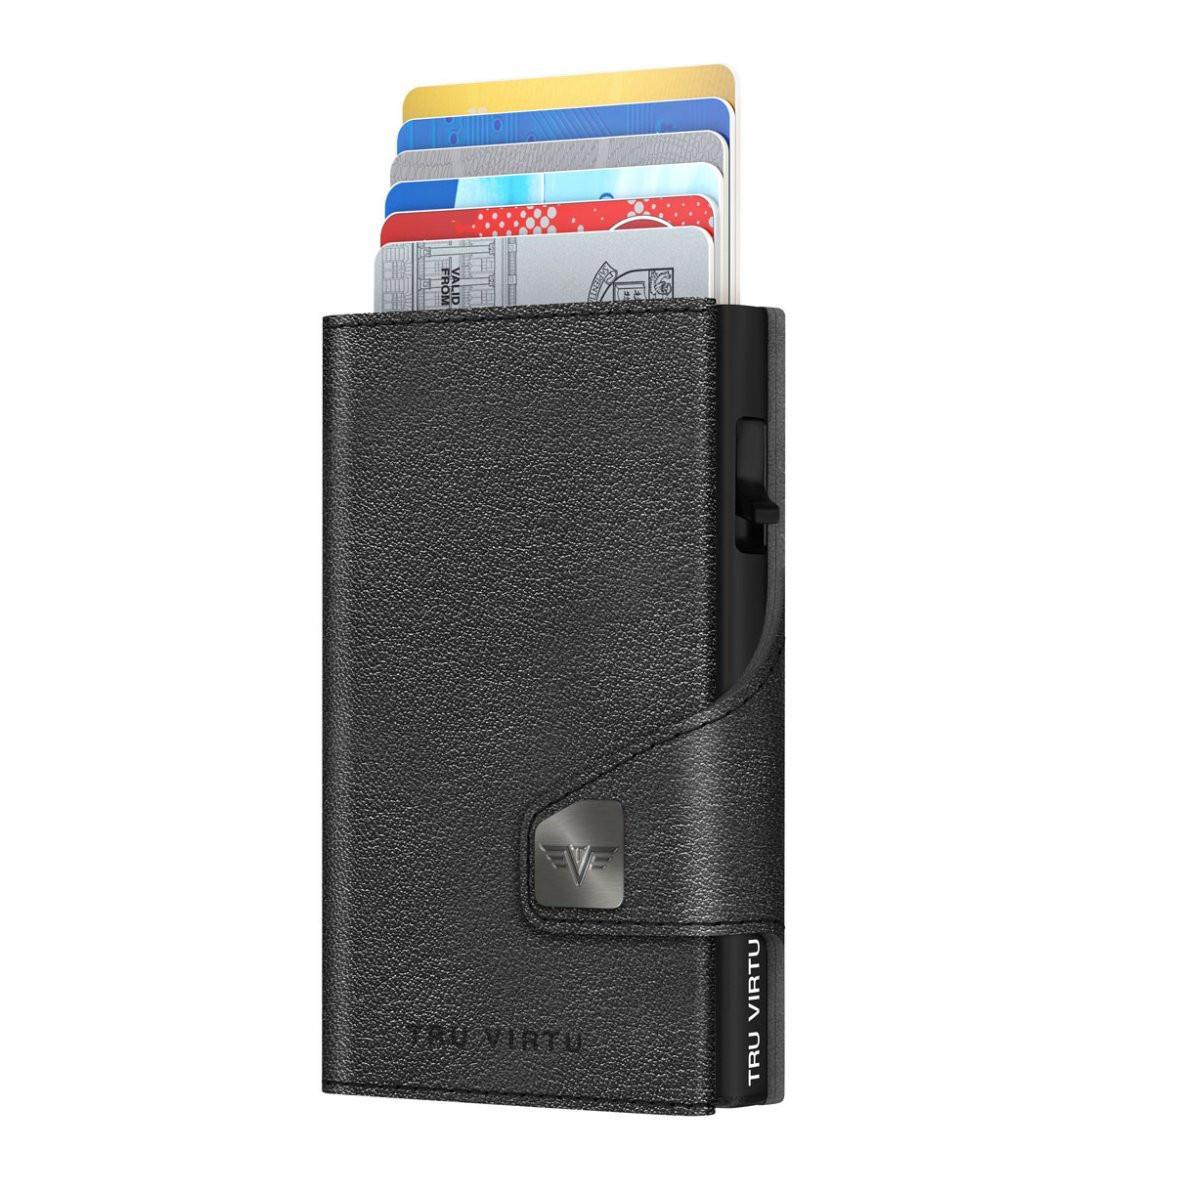 Tru Virtu  Wallet Click & Slide Coin Pocket Nappa Black/Black 